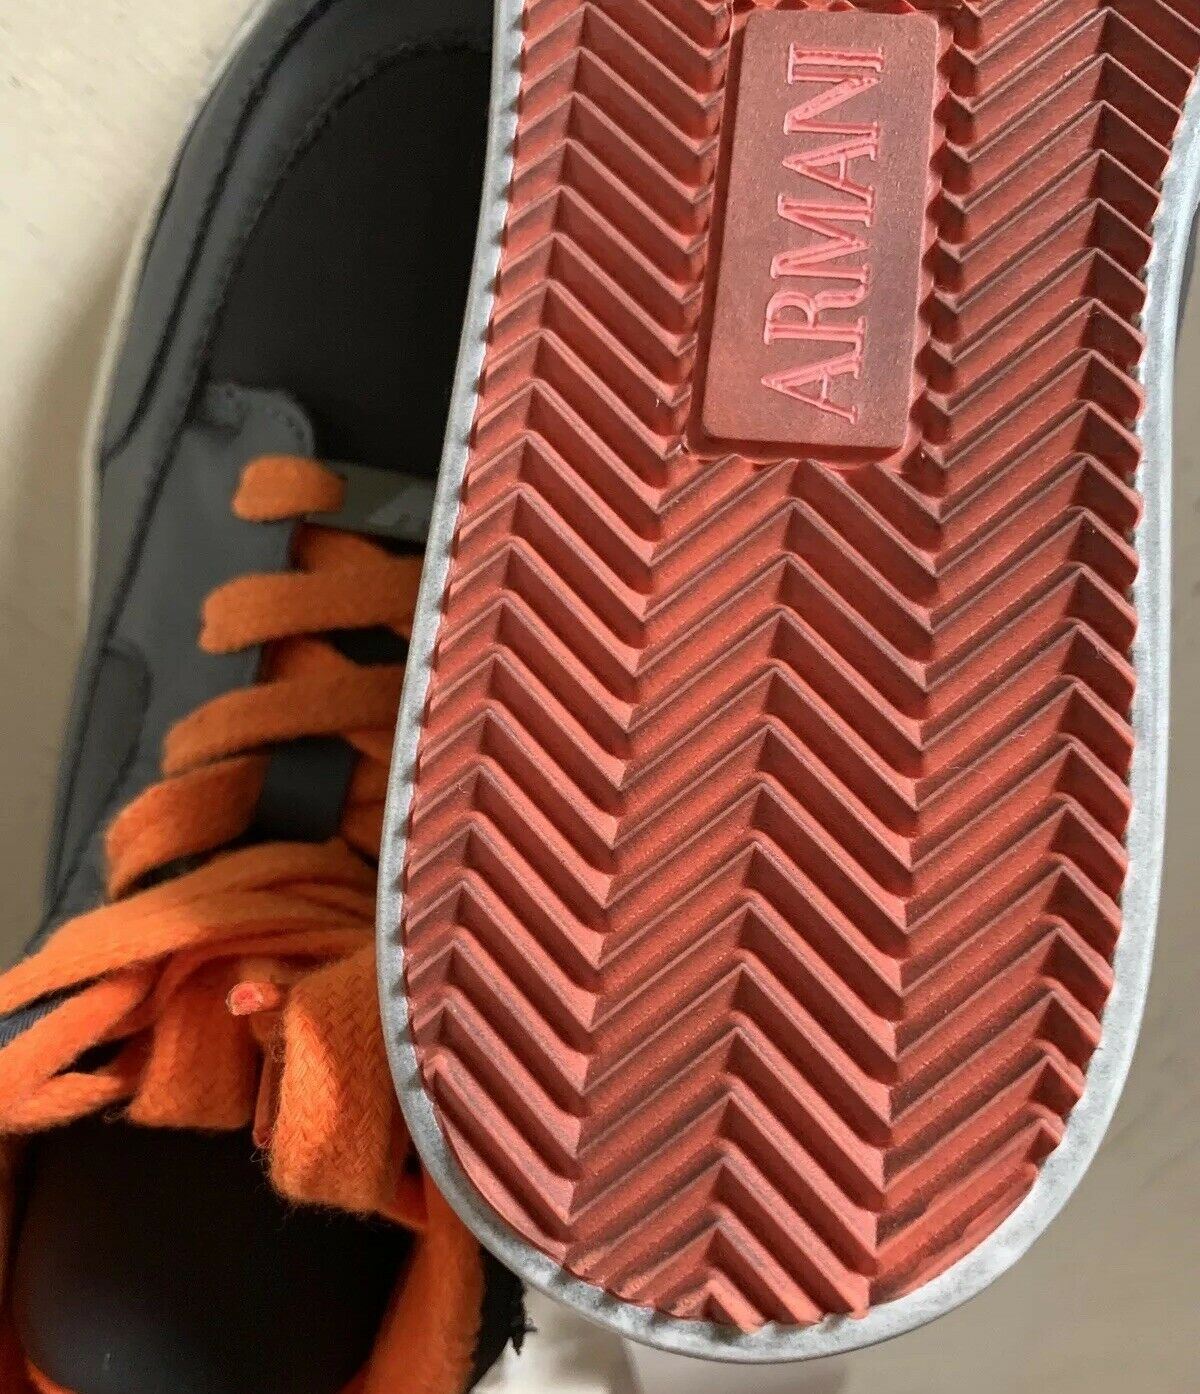 New Armani Junior Boys Leather/Nylon Sneakers Shoes Gray 4 US ( 36 Eur )